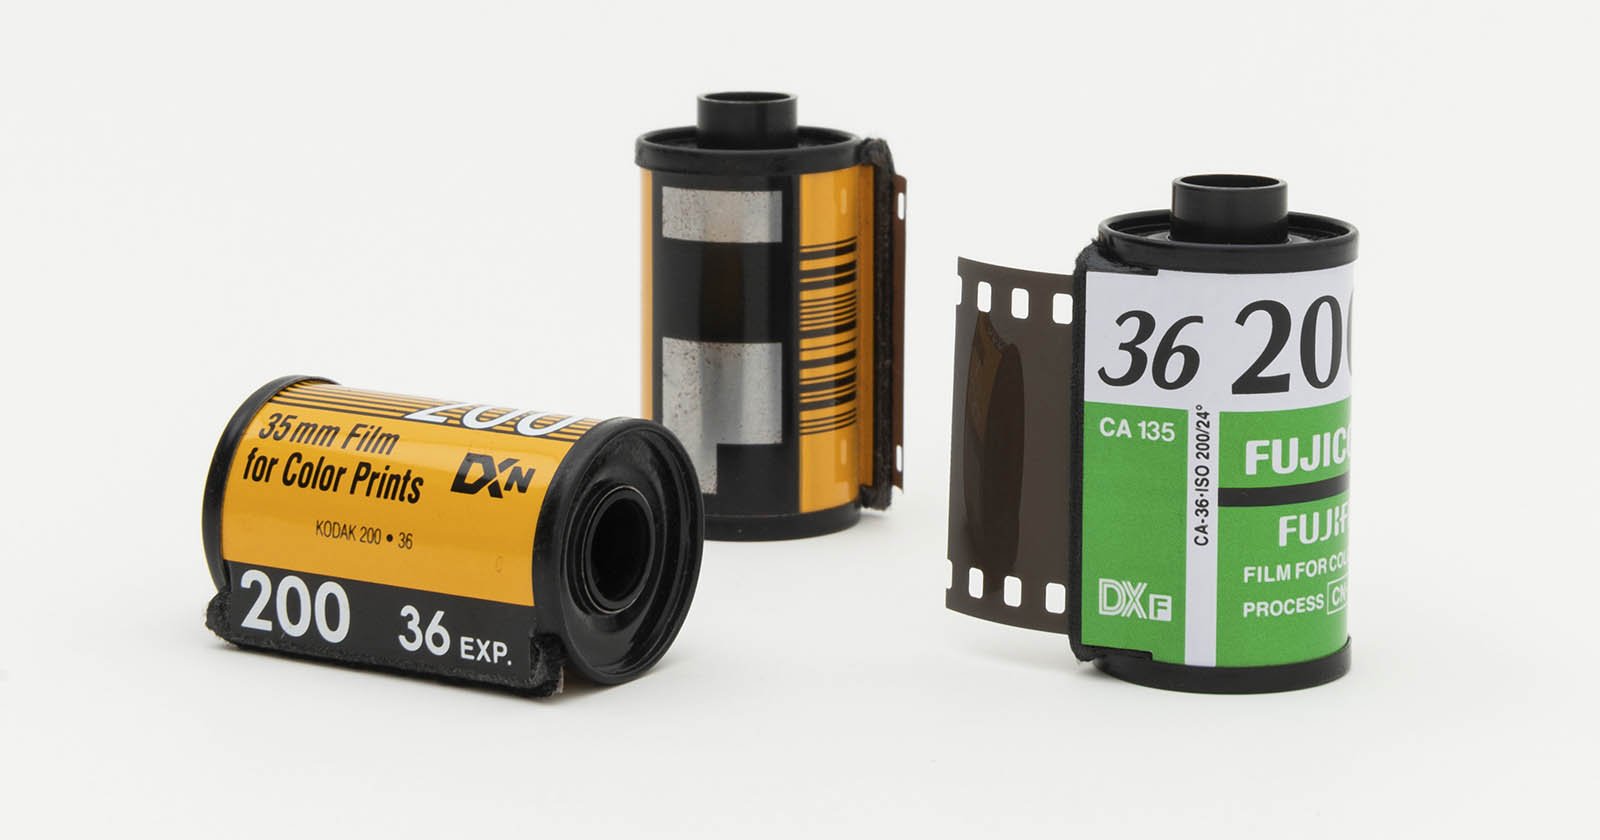 Leked Kodak Kodak Gold Film For 35mm Camera, Iso200 Sensitivity, 35mm Document Film 2 Rolls